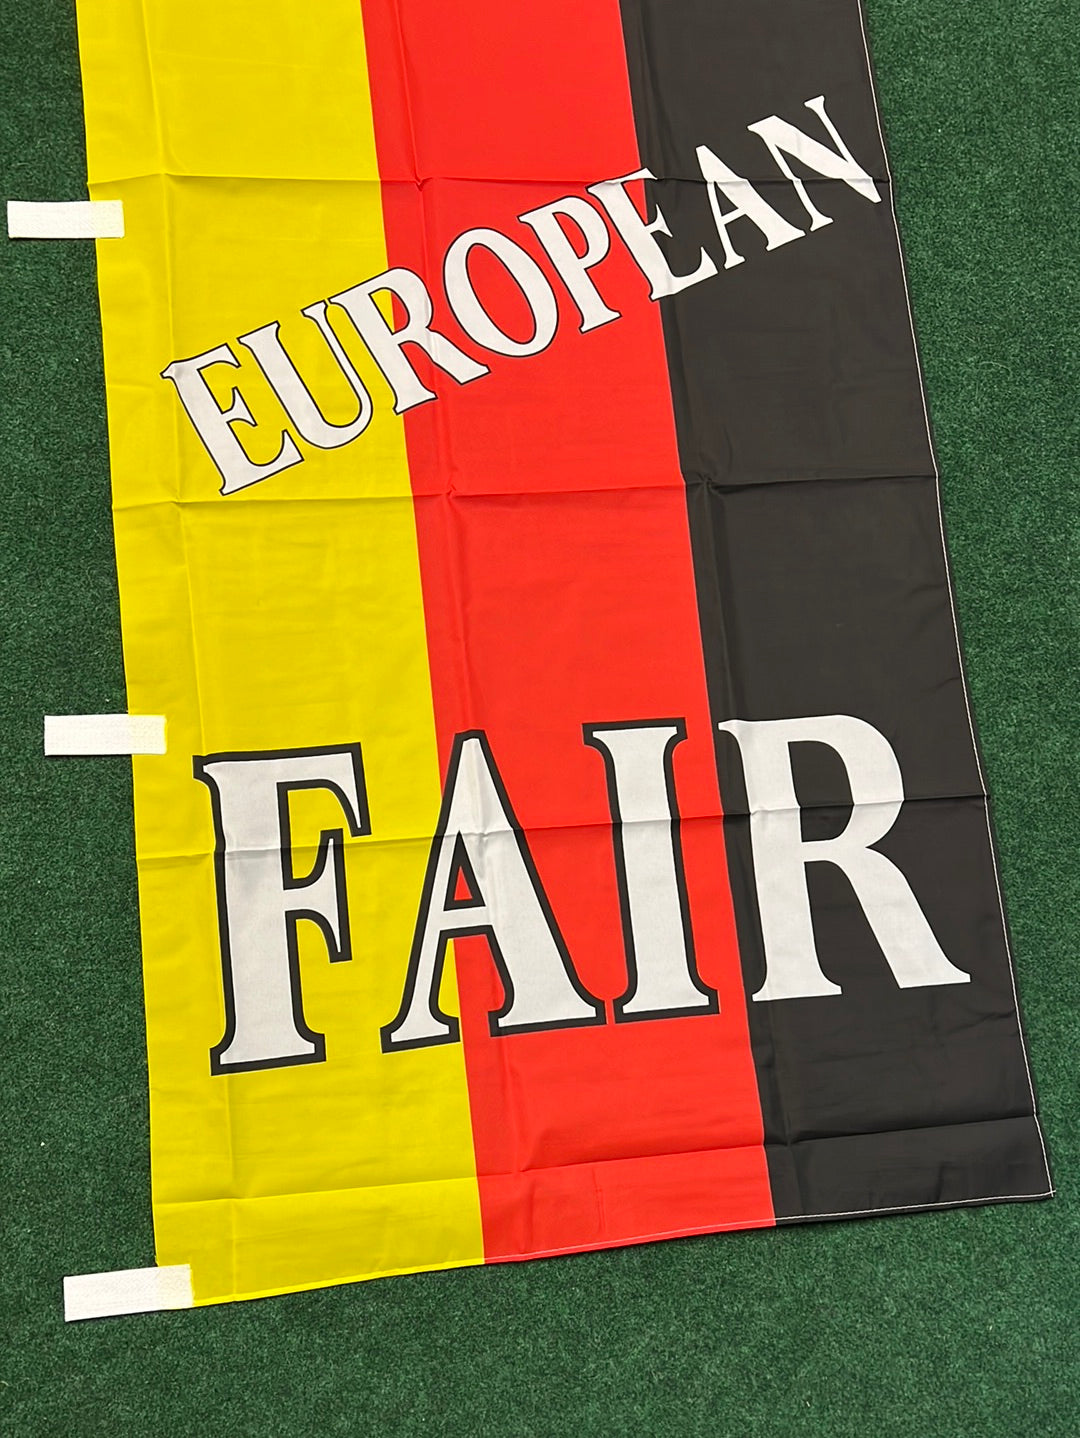 Best Selection European Fair - Japanese Used Car Dealer Advertising Nobori Banner